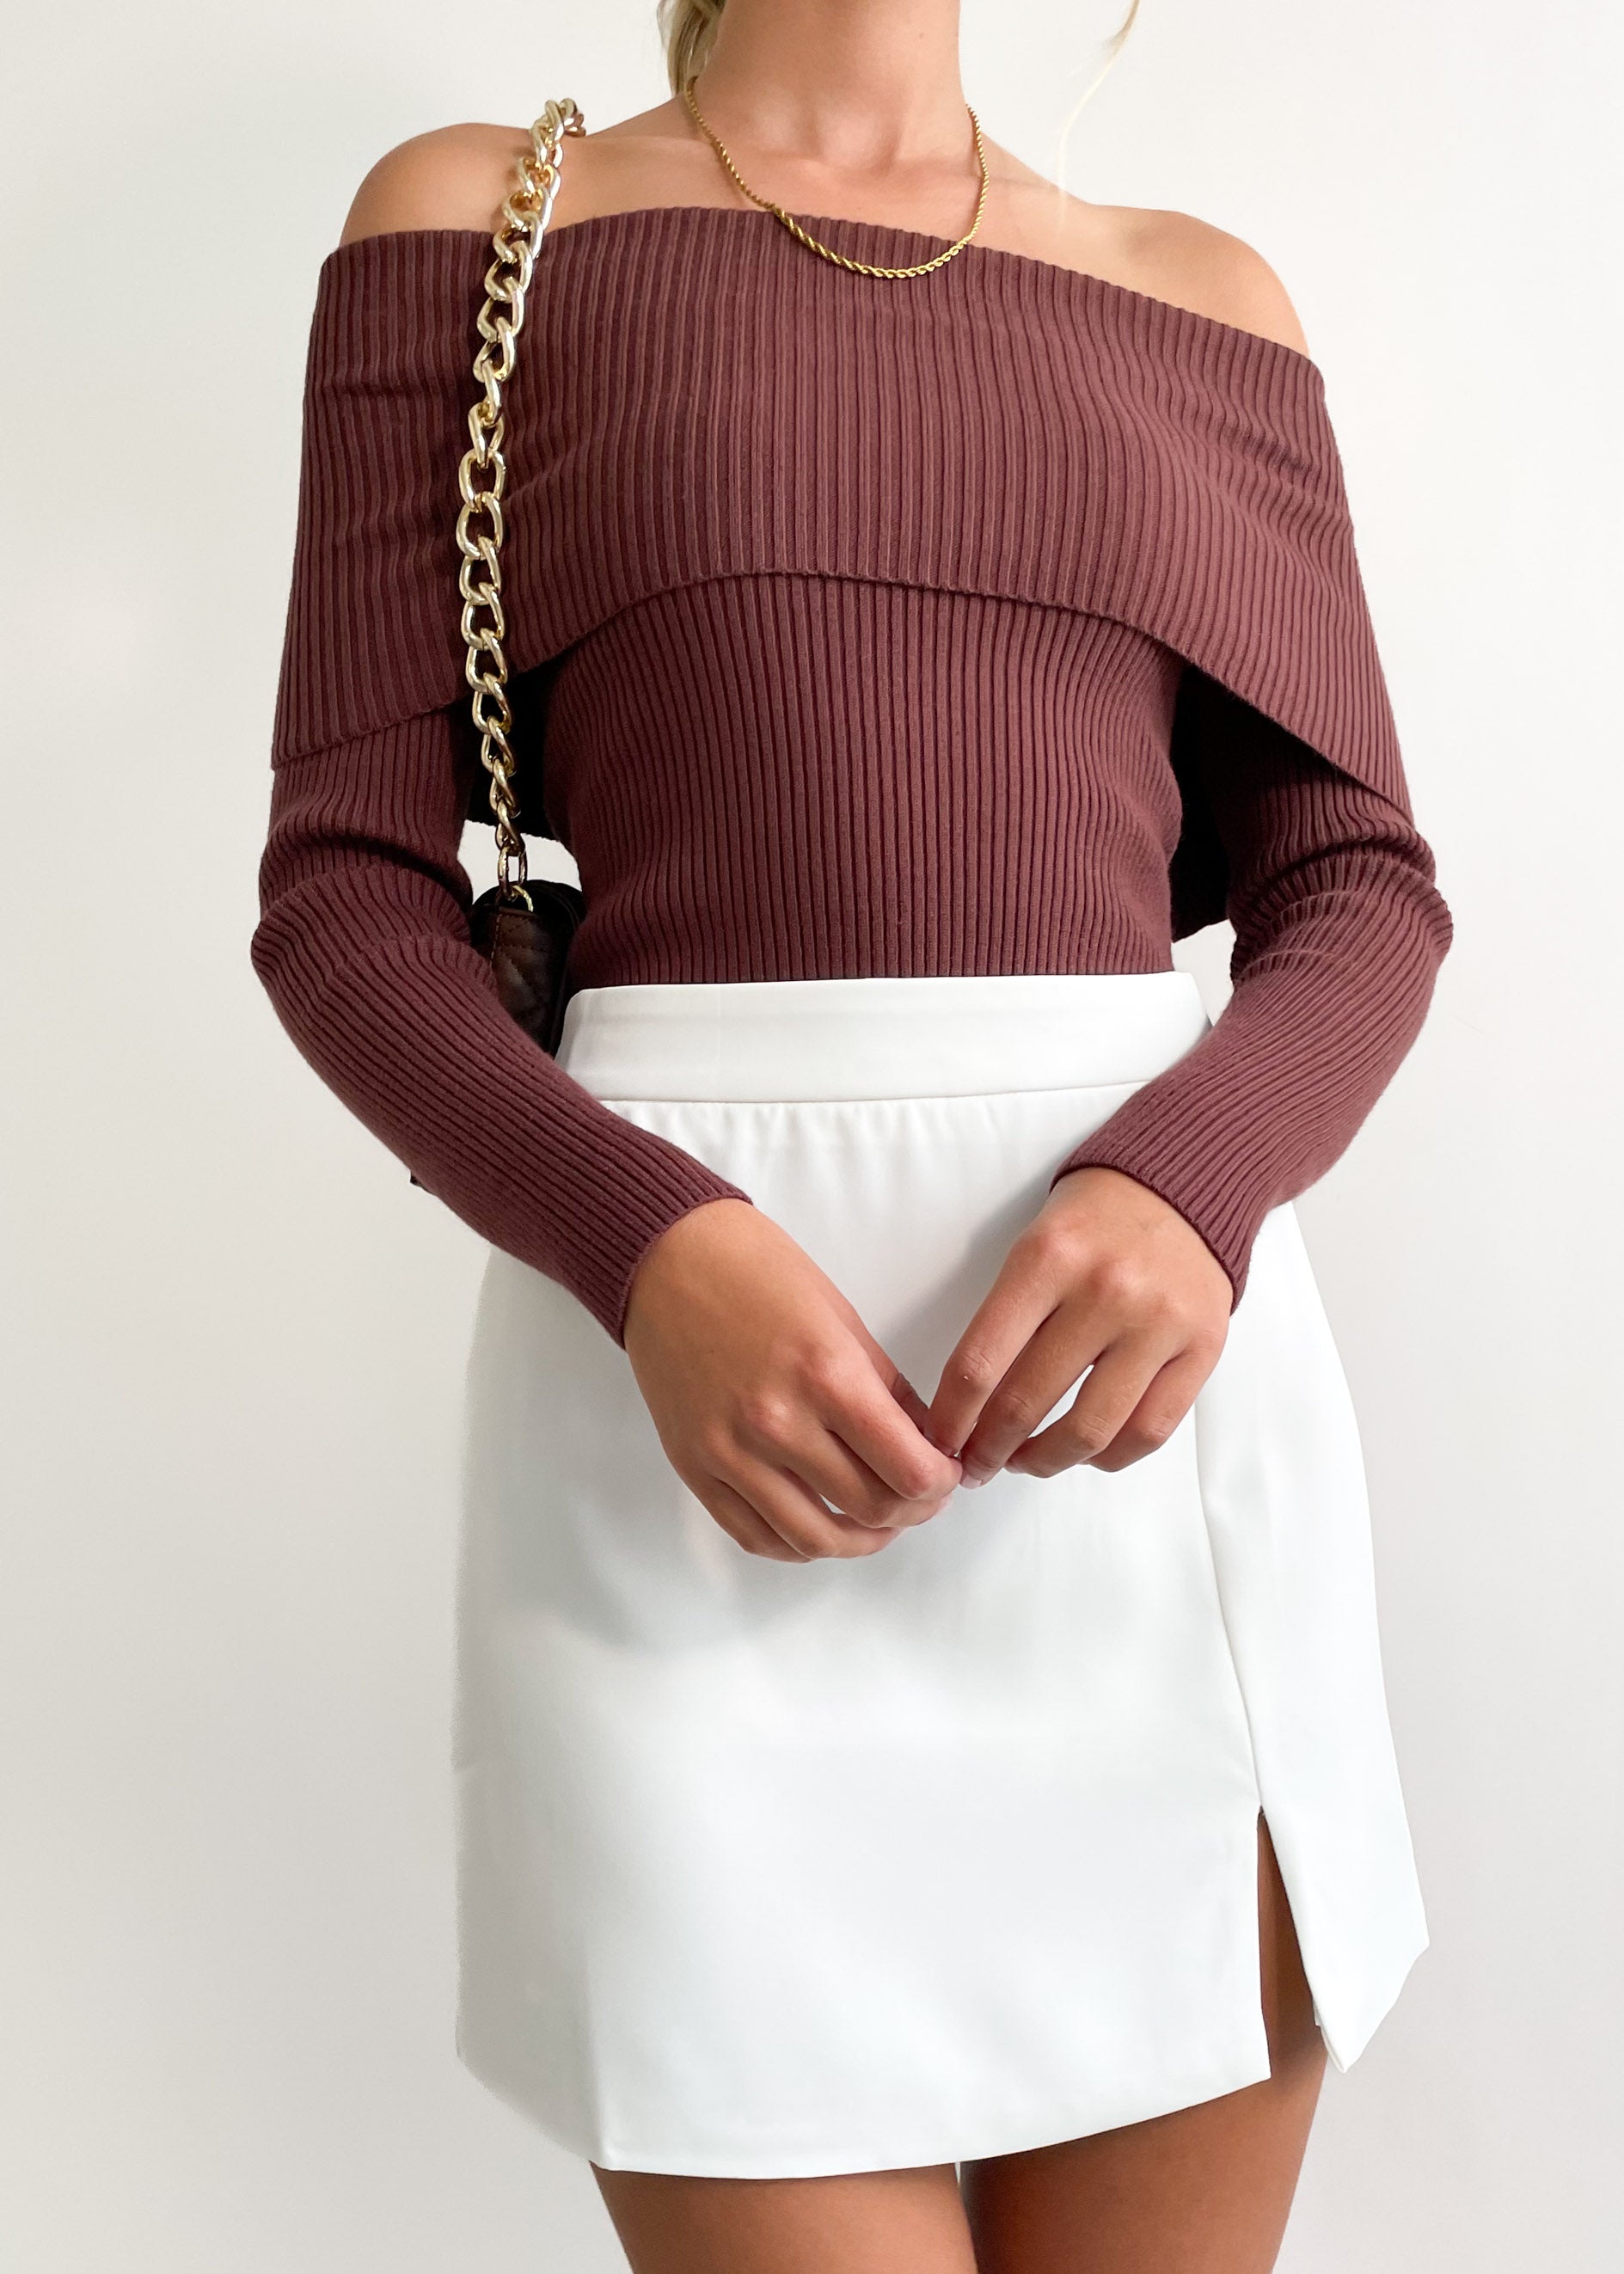 Tiegan Skirt - Off White